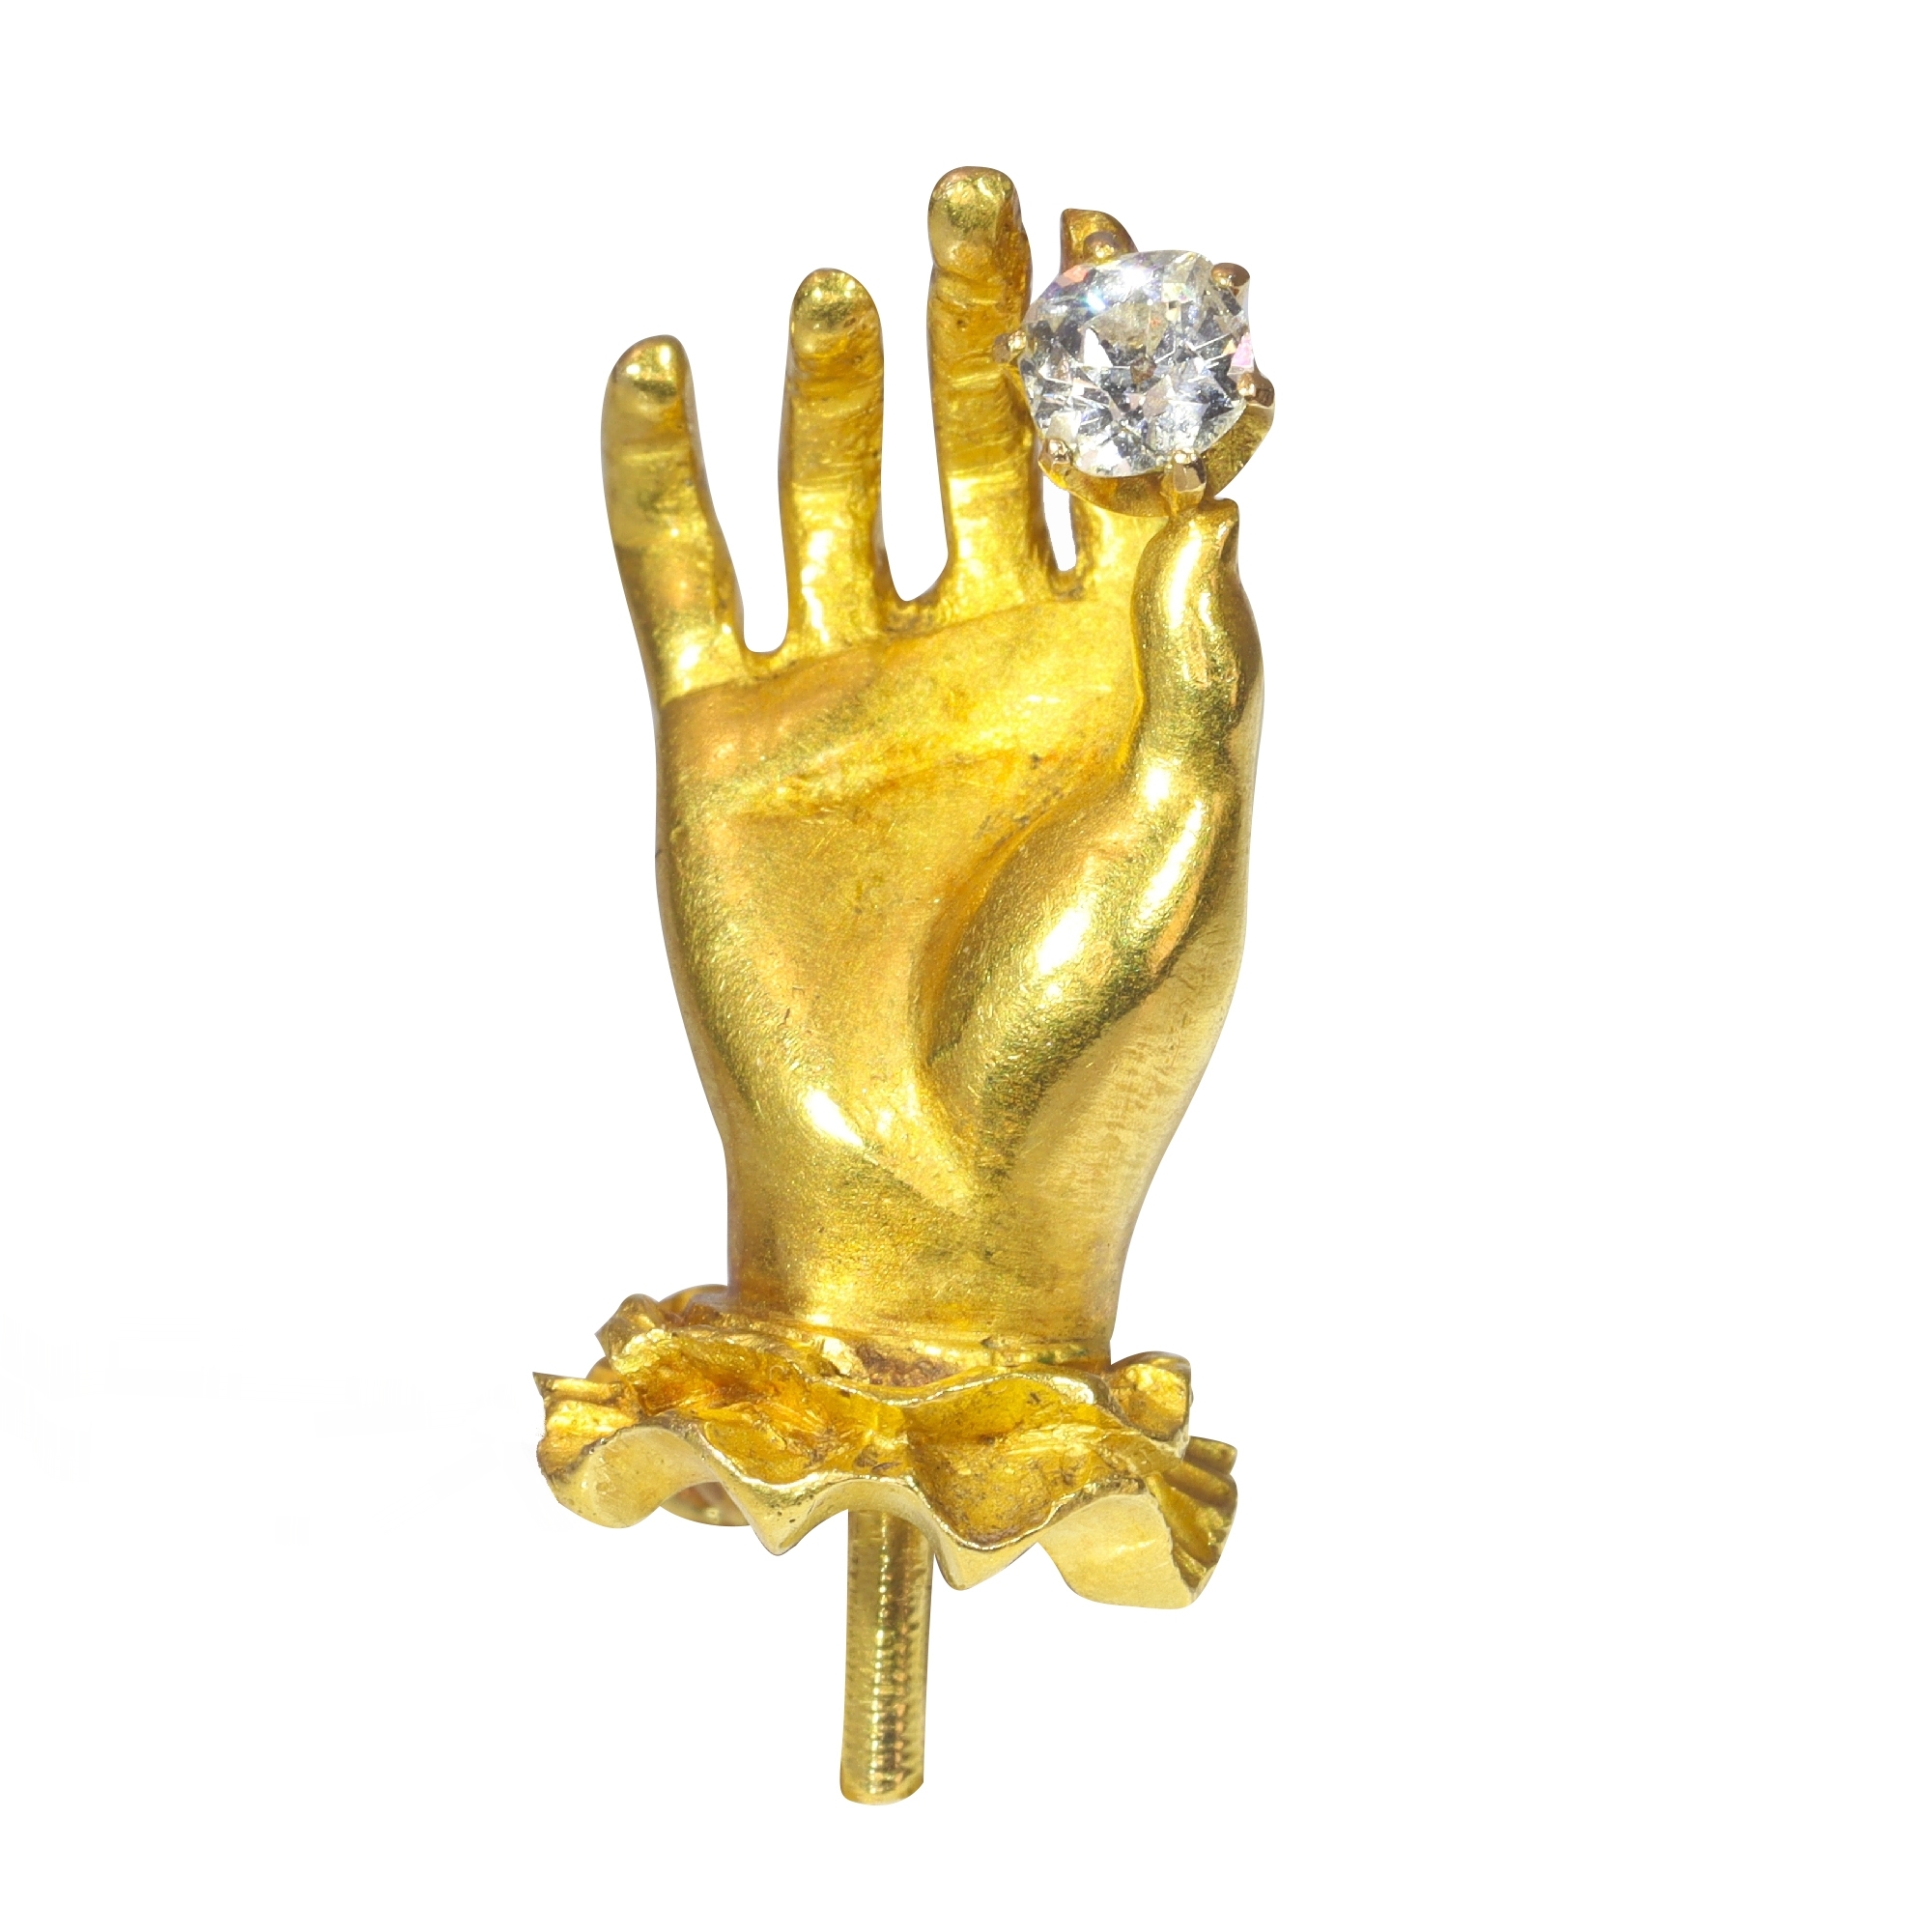 Antique 18K yellow gold tiepin hand holding an old mine cut diamond